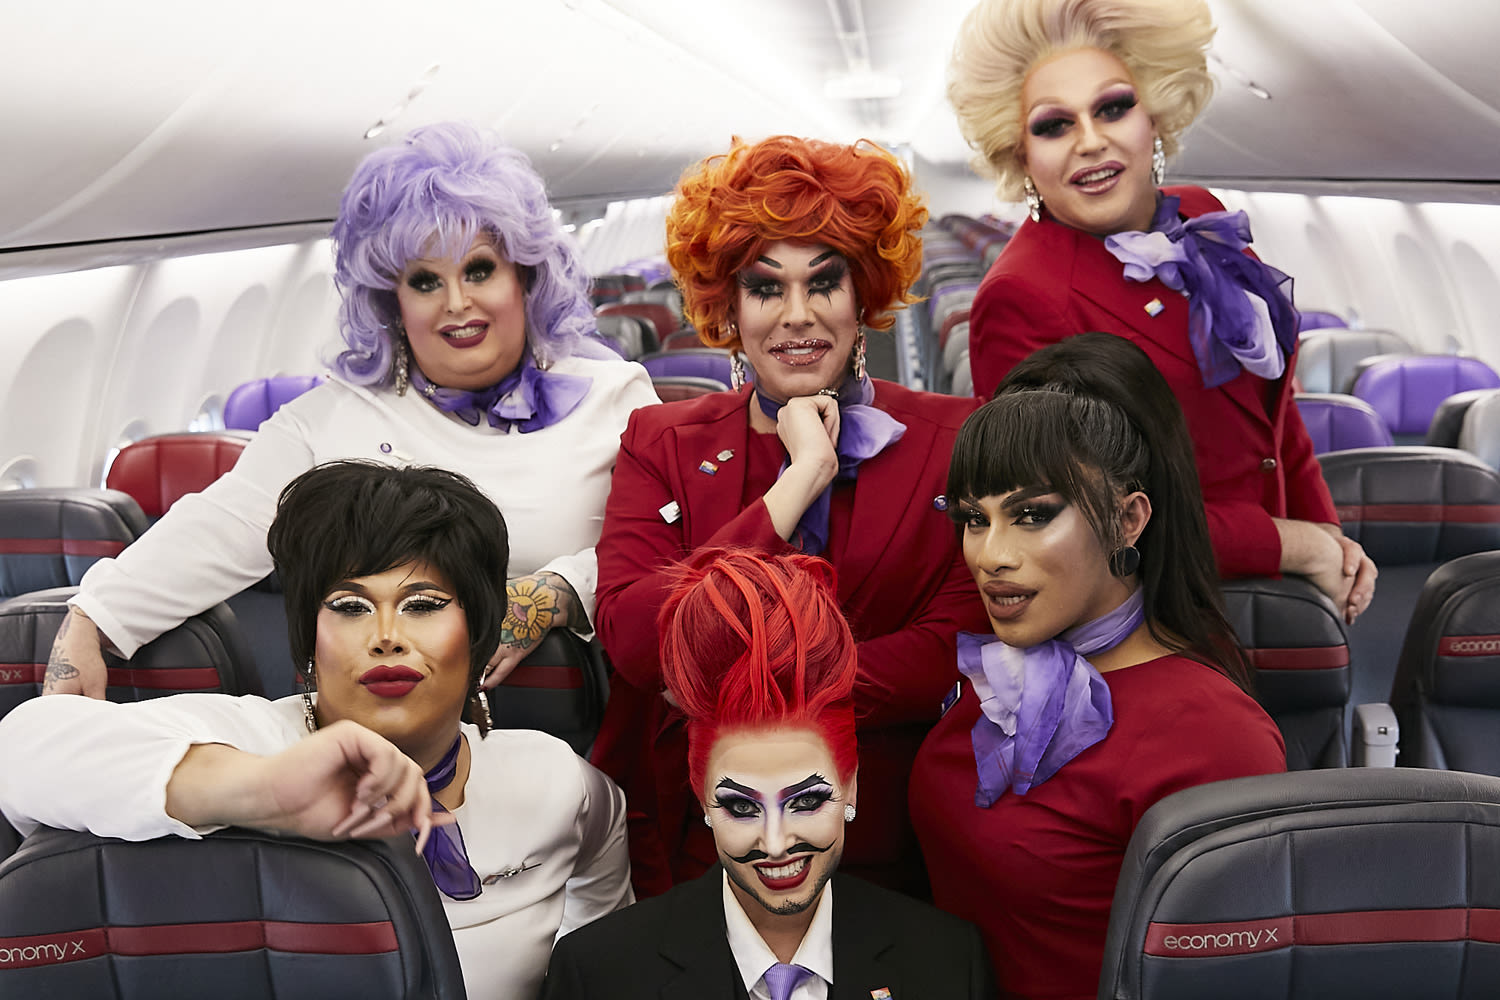 Drag queens on Virgin Australia's plane